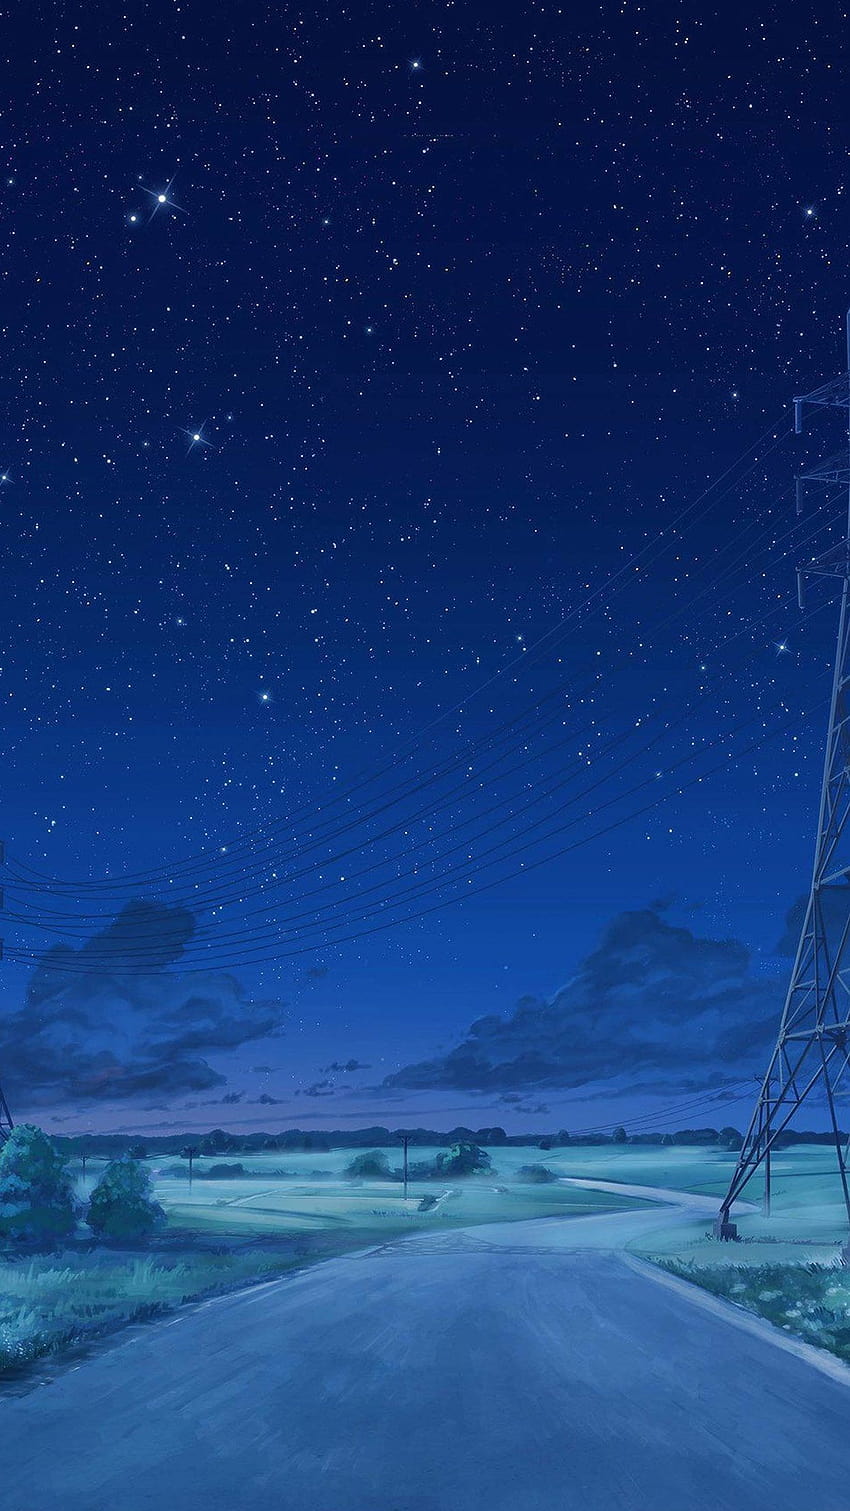 Details more than 85 anime sky background latest - highschoolcanada.edu.vn